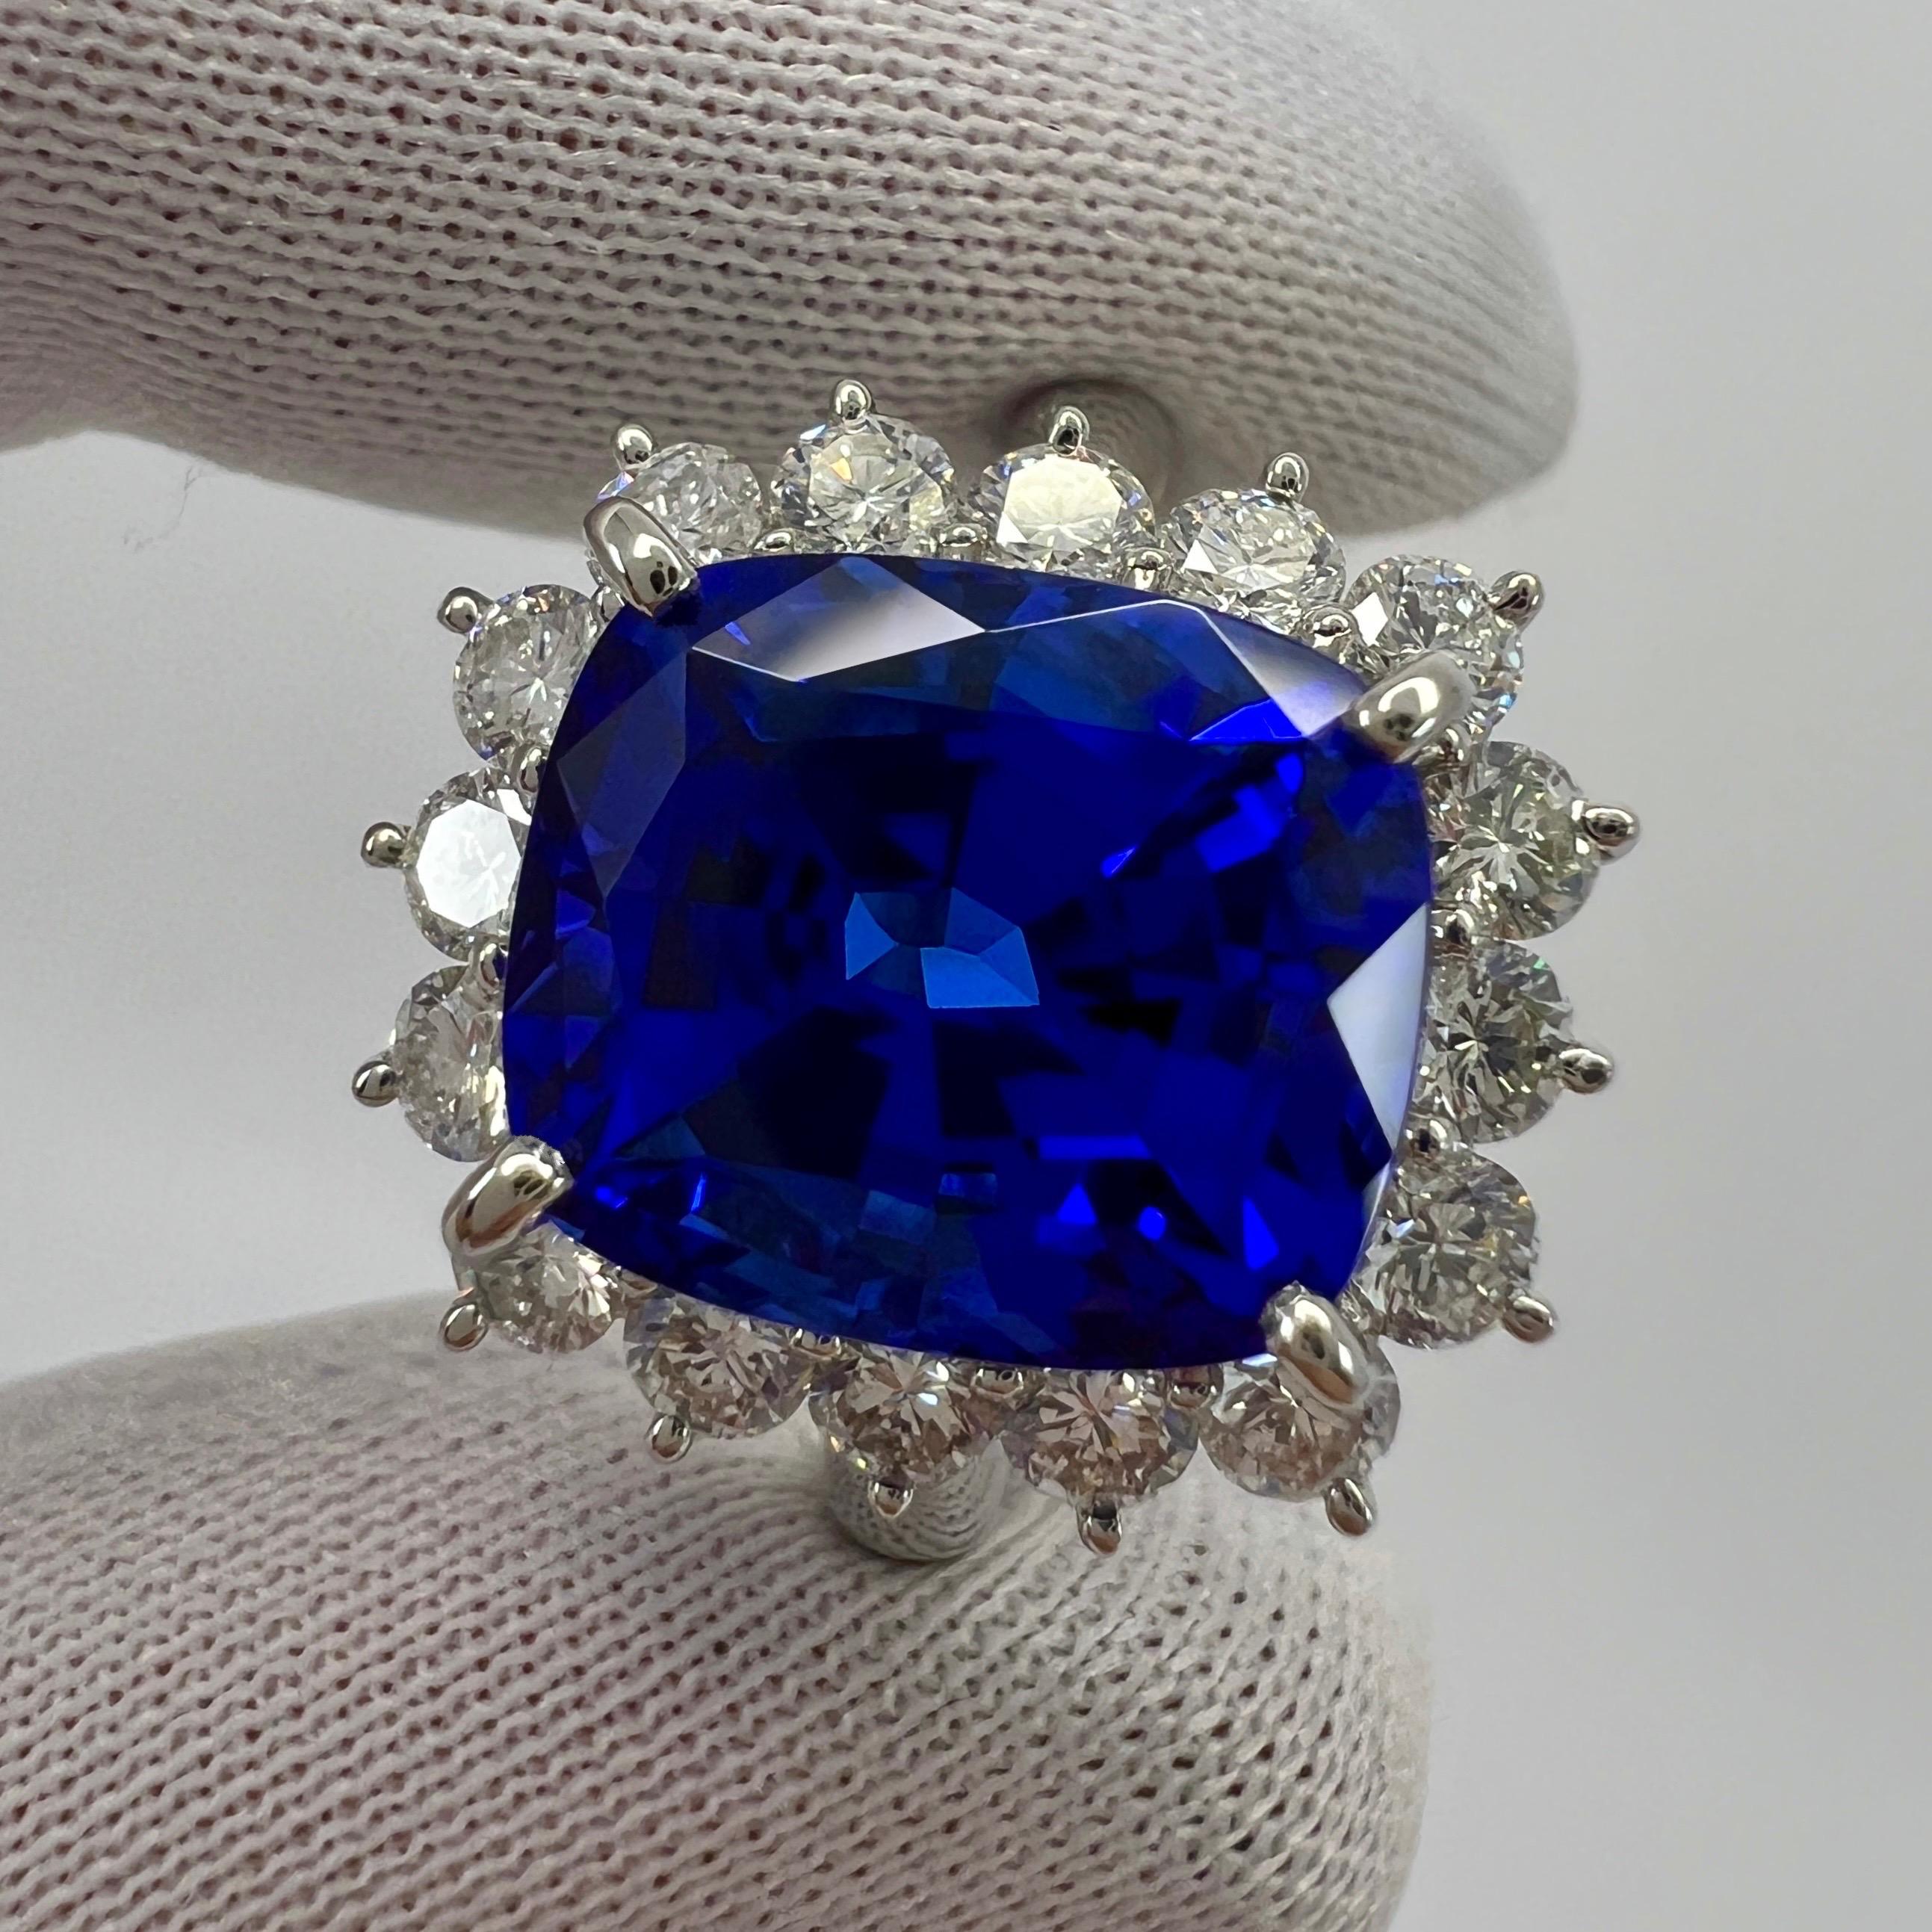 Women's or Men's 7.04ct Natural Vivid Blue Violet Tanzanite Cushion Cut Diamond Cocktail Ring